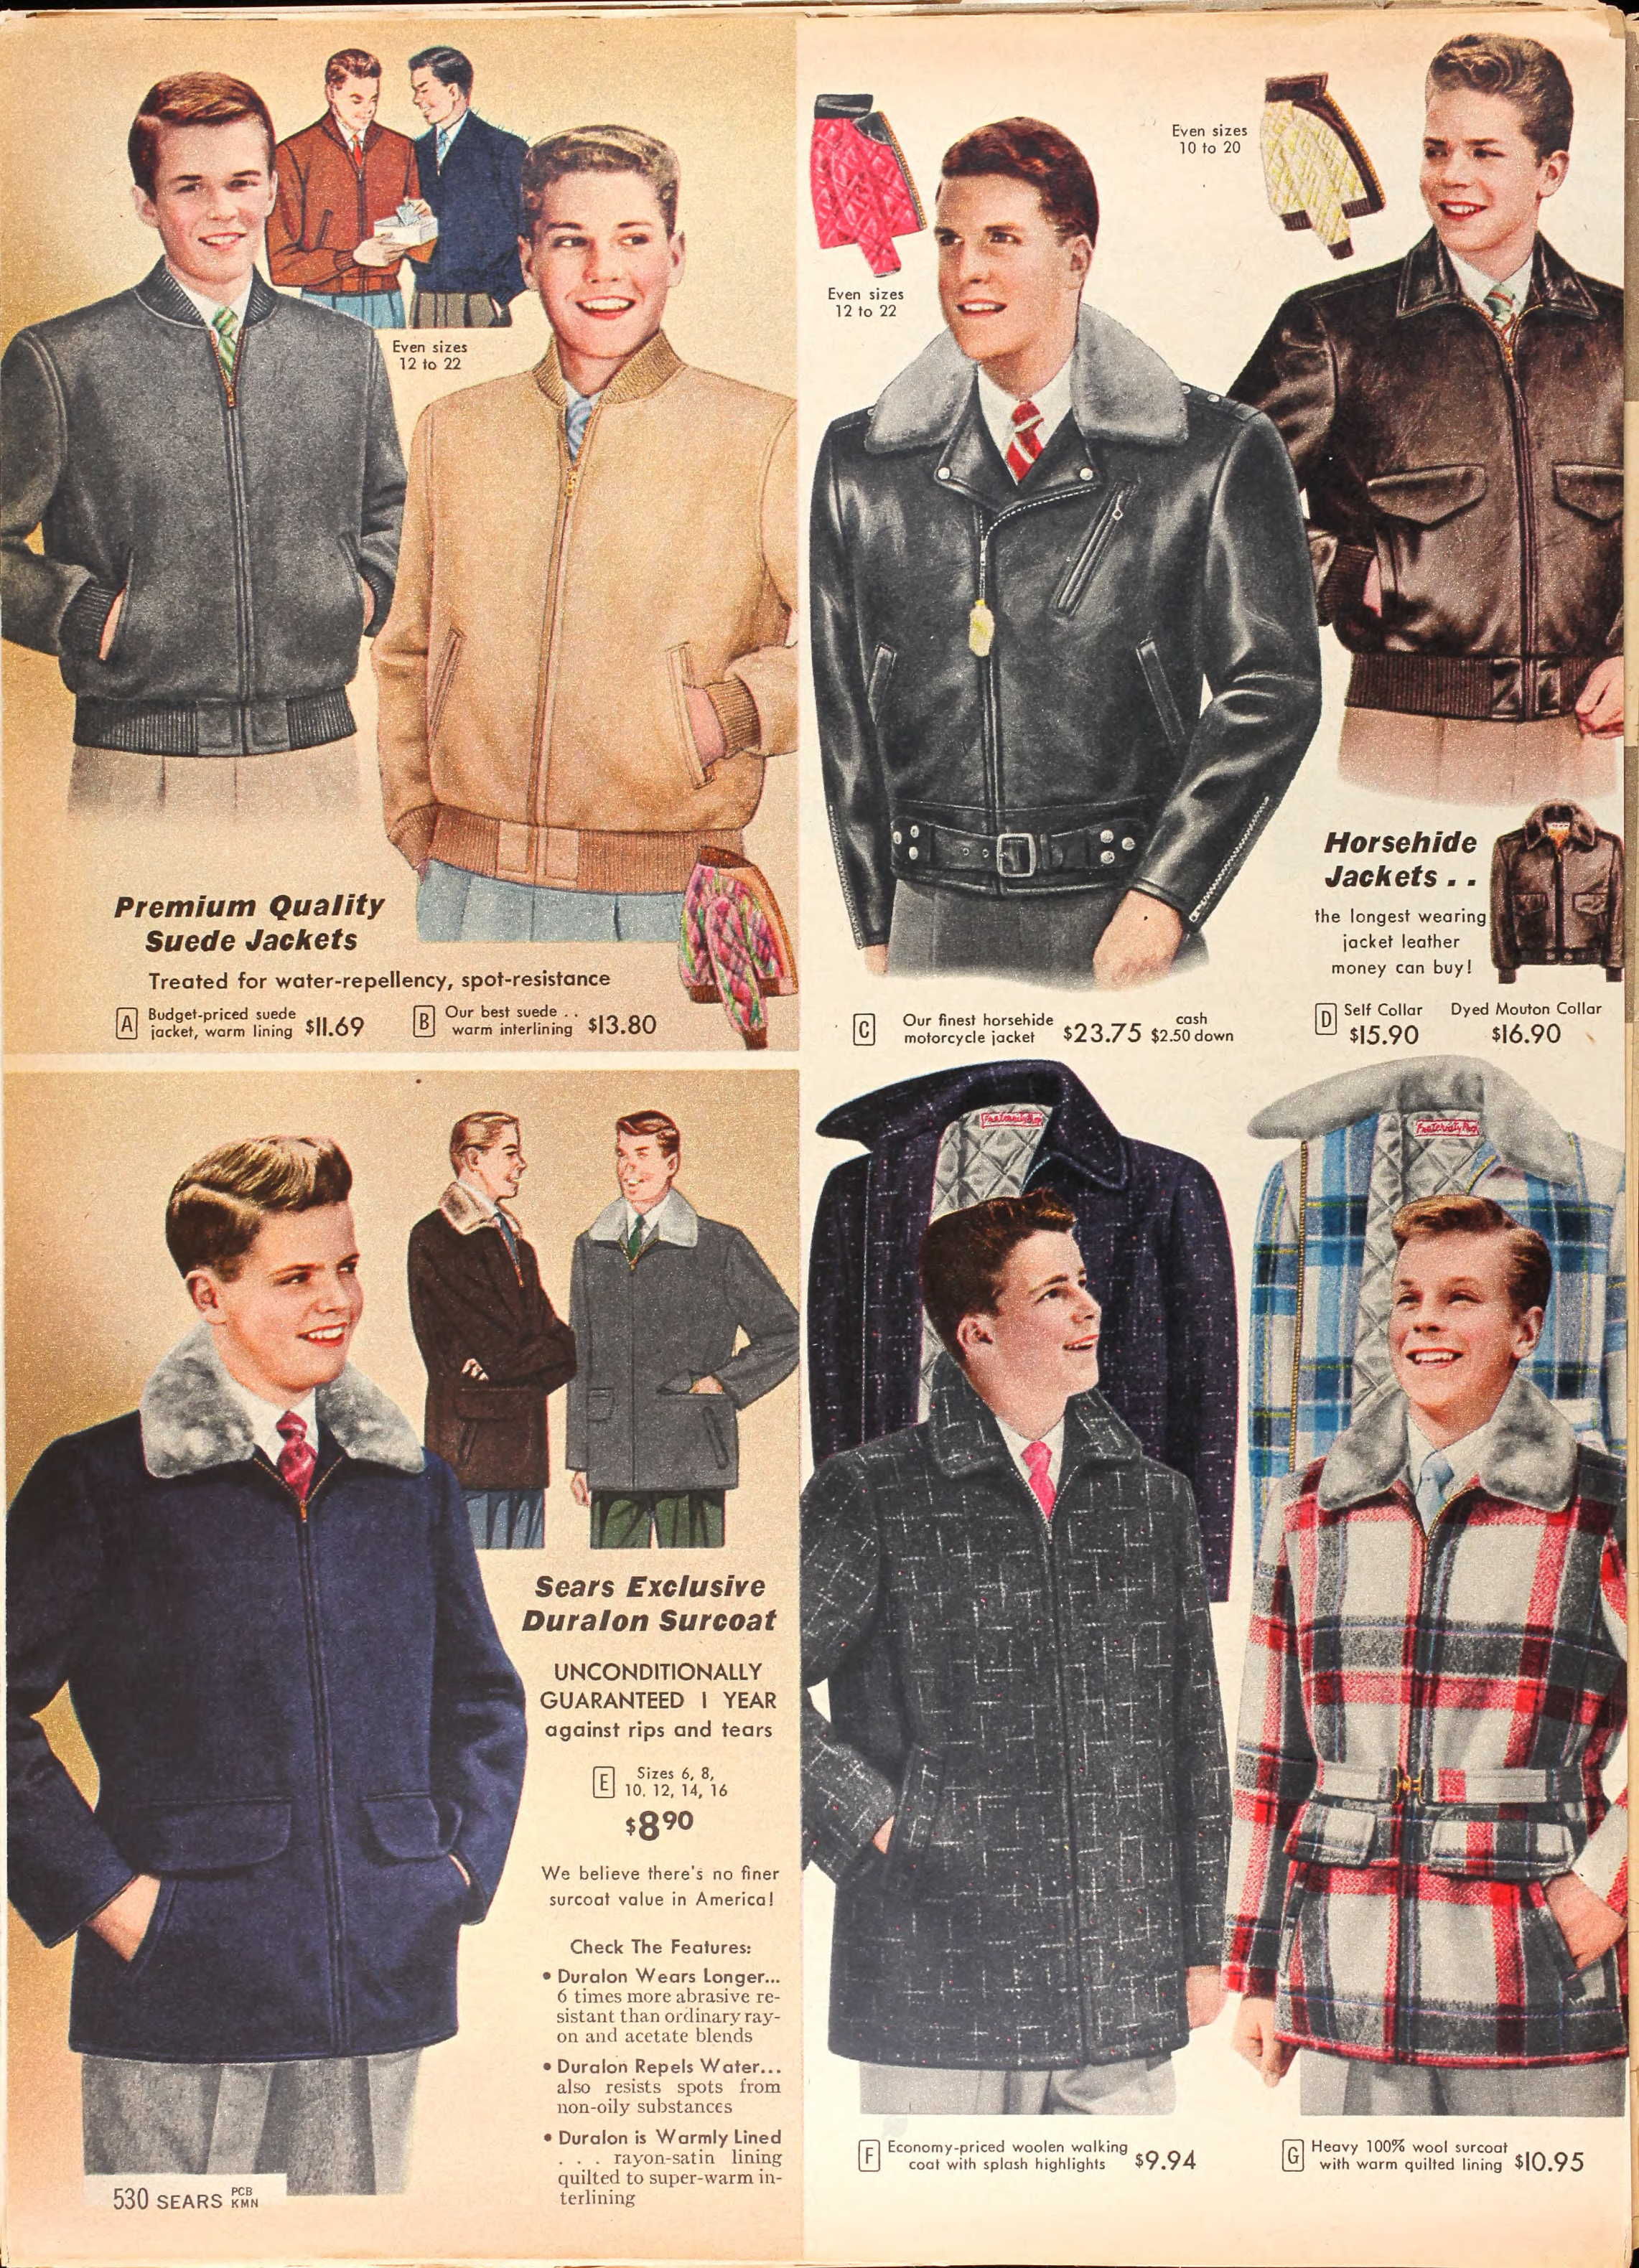 Sears Motorcylce Jacket History 1949-1963 | The Fedora Lounge